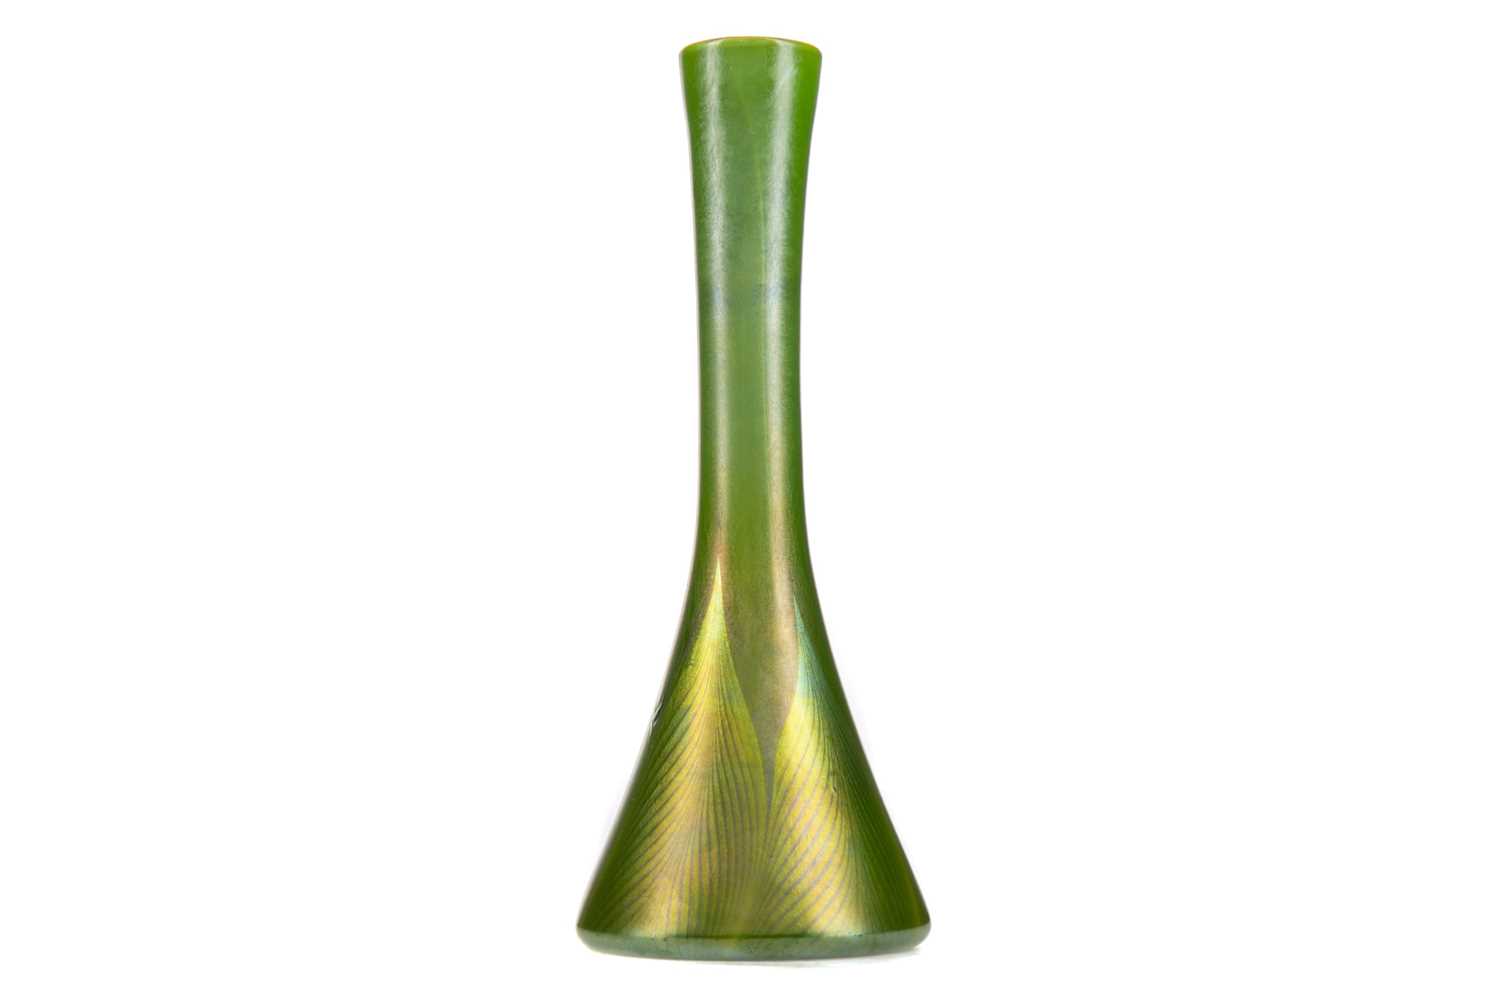 Lot 538 - LOUIS COMFORT TIFFANY (AMERICAN 1848-1933), AN ART NOUVEAU IRIDESCENT FAVRILE GLASS VASE